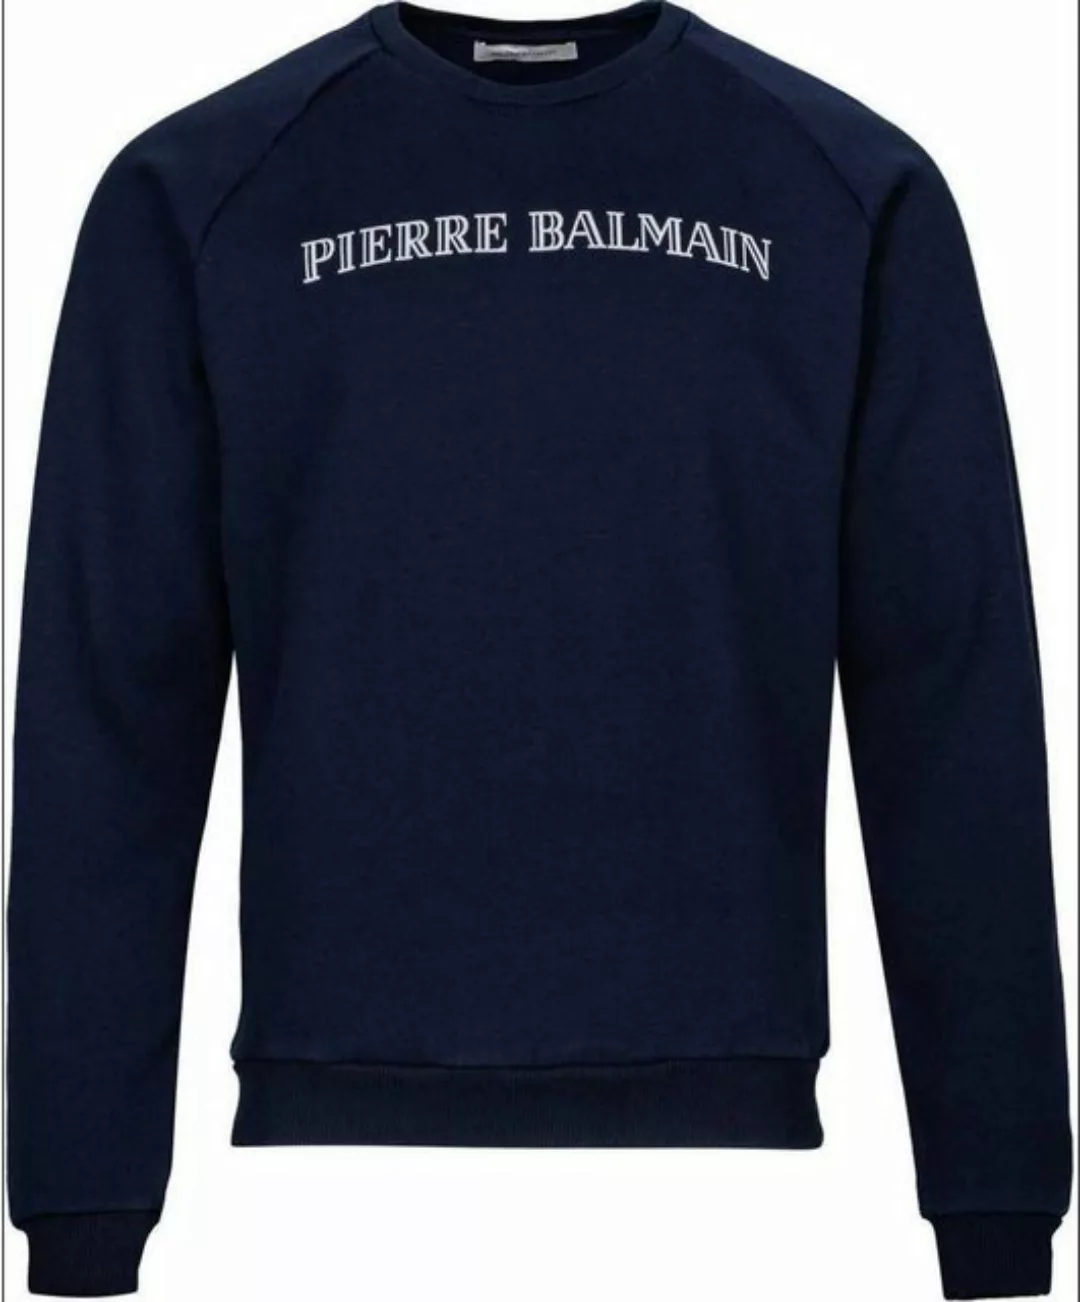 Balmain Sweatshirt PIERRE BALMAIN ICONIC LOGO SWEATSHIRT BLAU günstig online kaufen